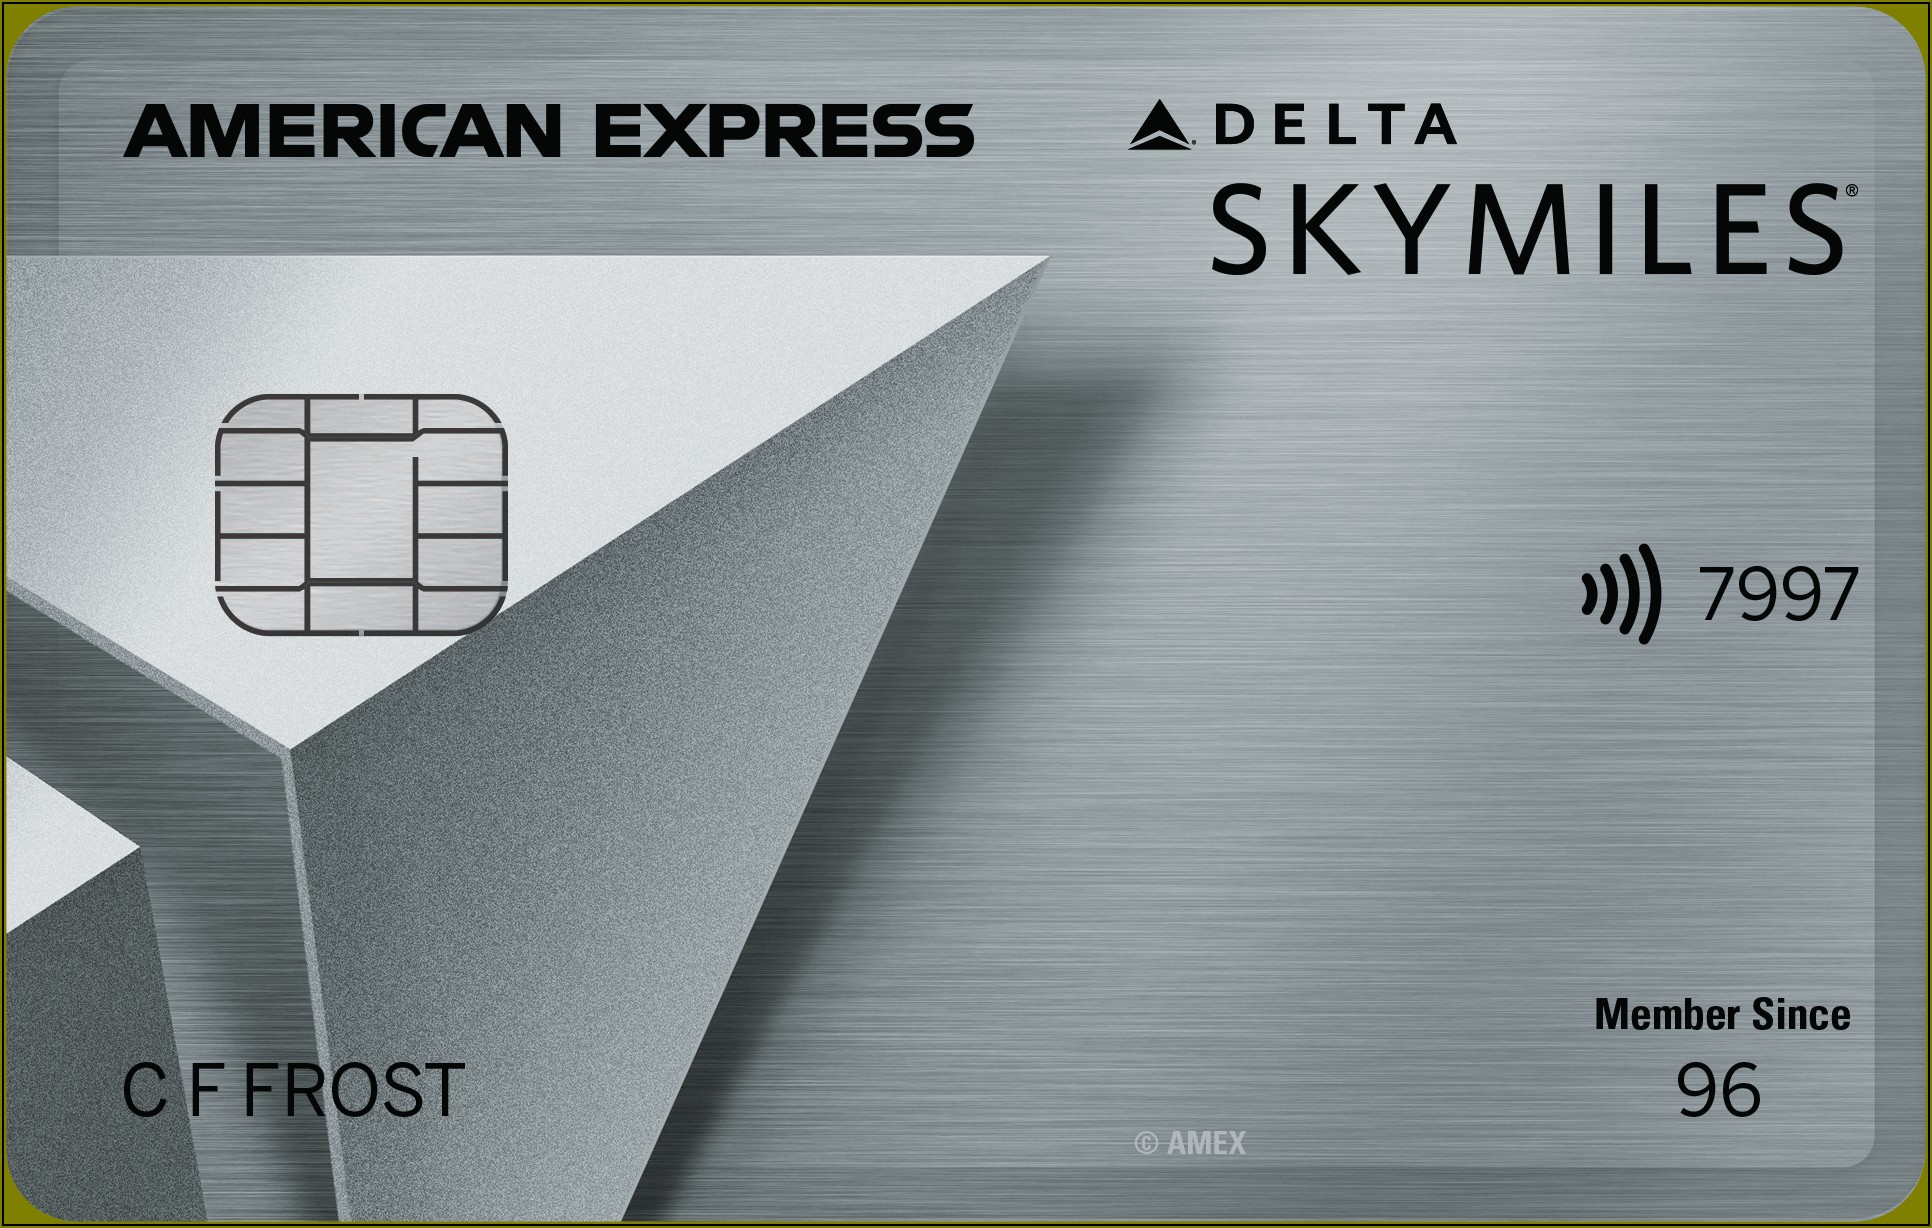 Delta Reserve For Business Credit Card Benefits